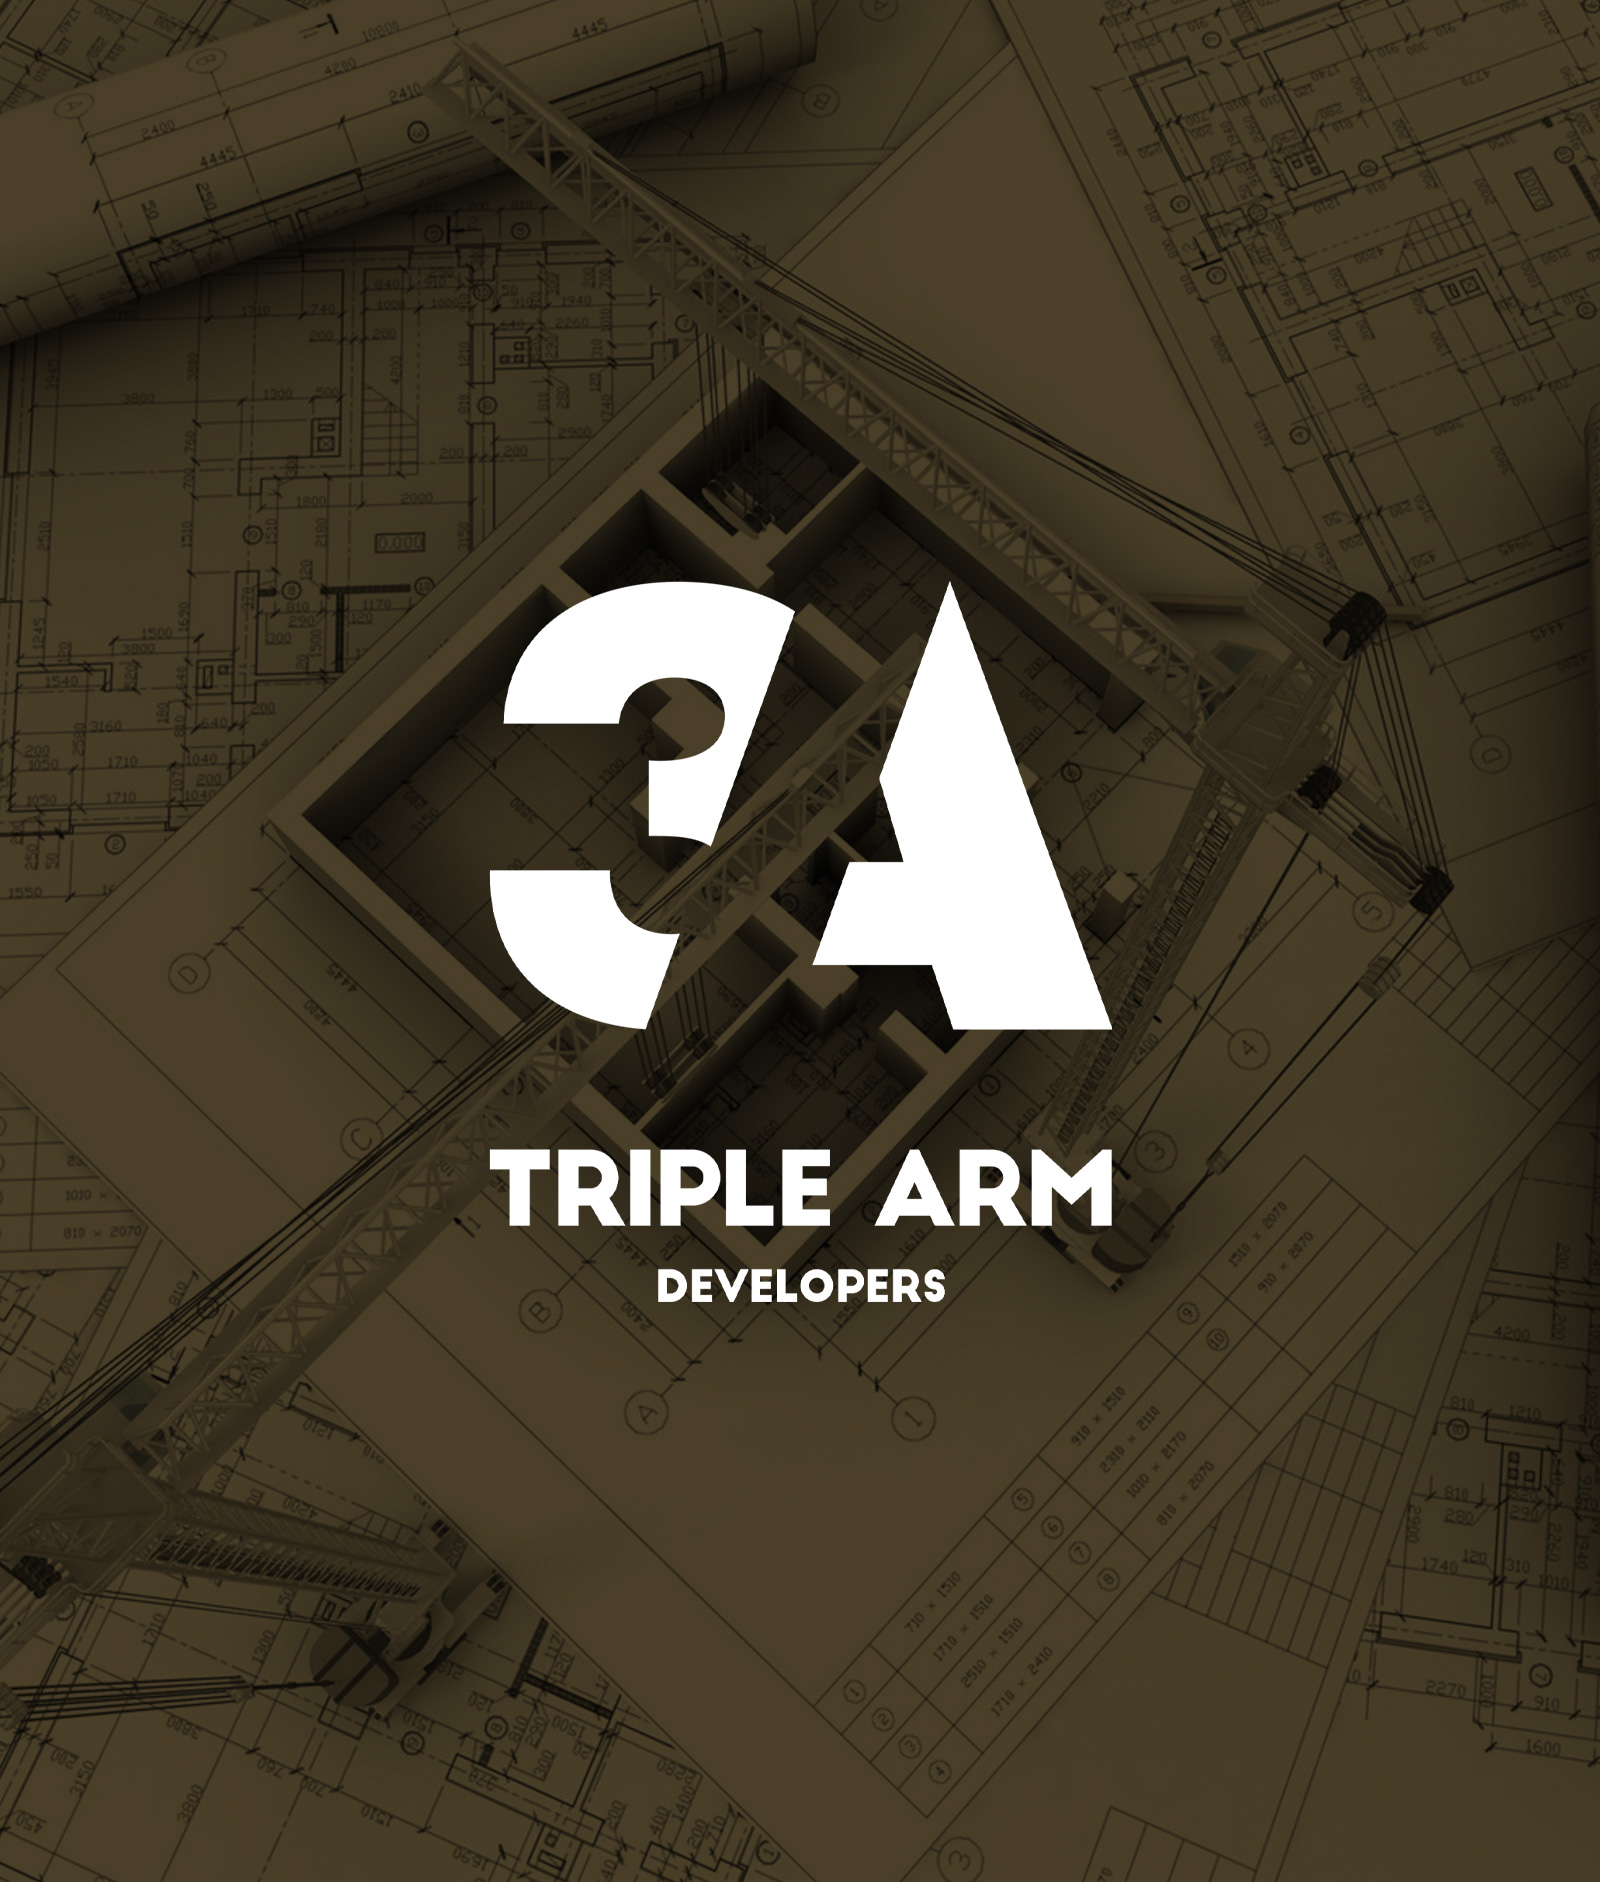 Triple Arm Developers